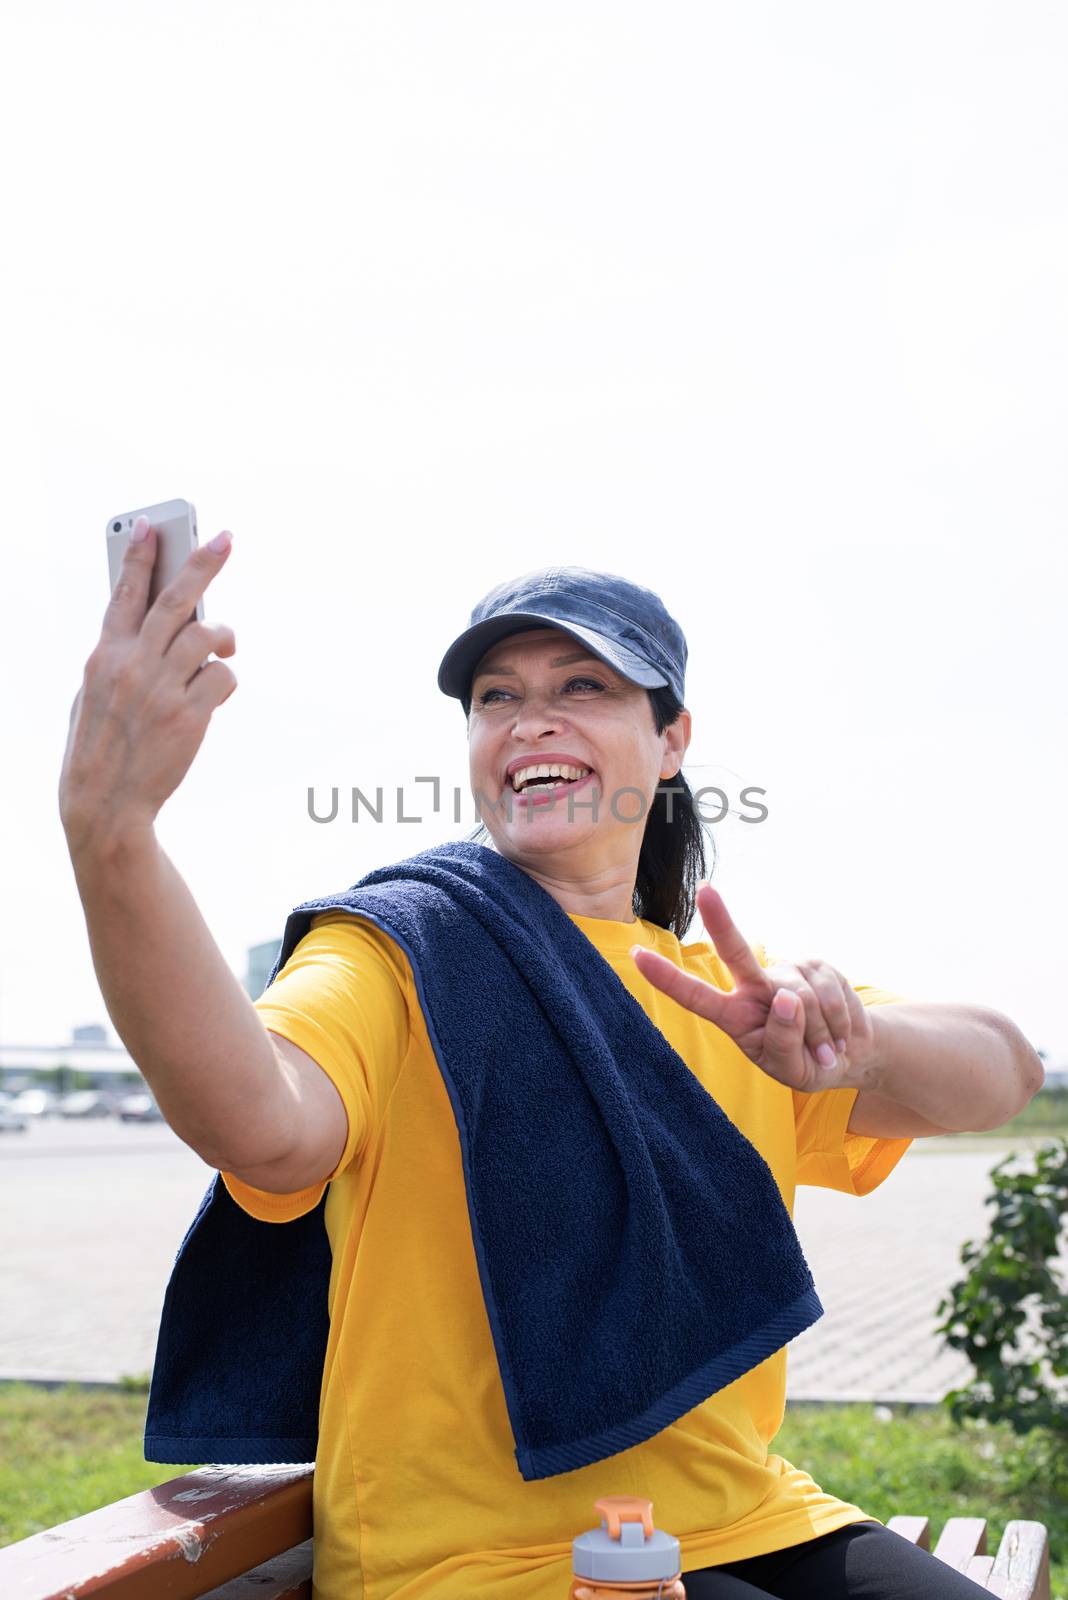 Smiling senior sportswoman doing selfie outdoors in the park by Desperada